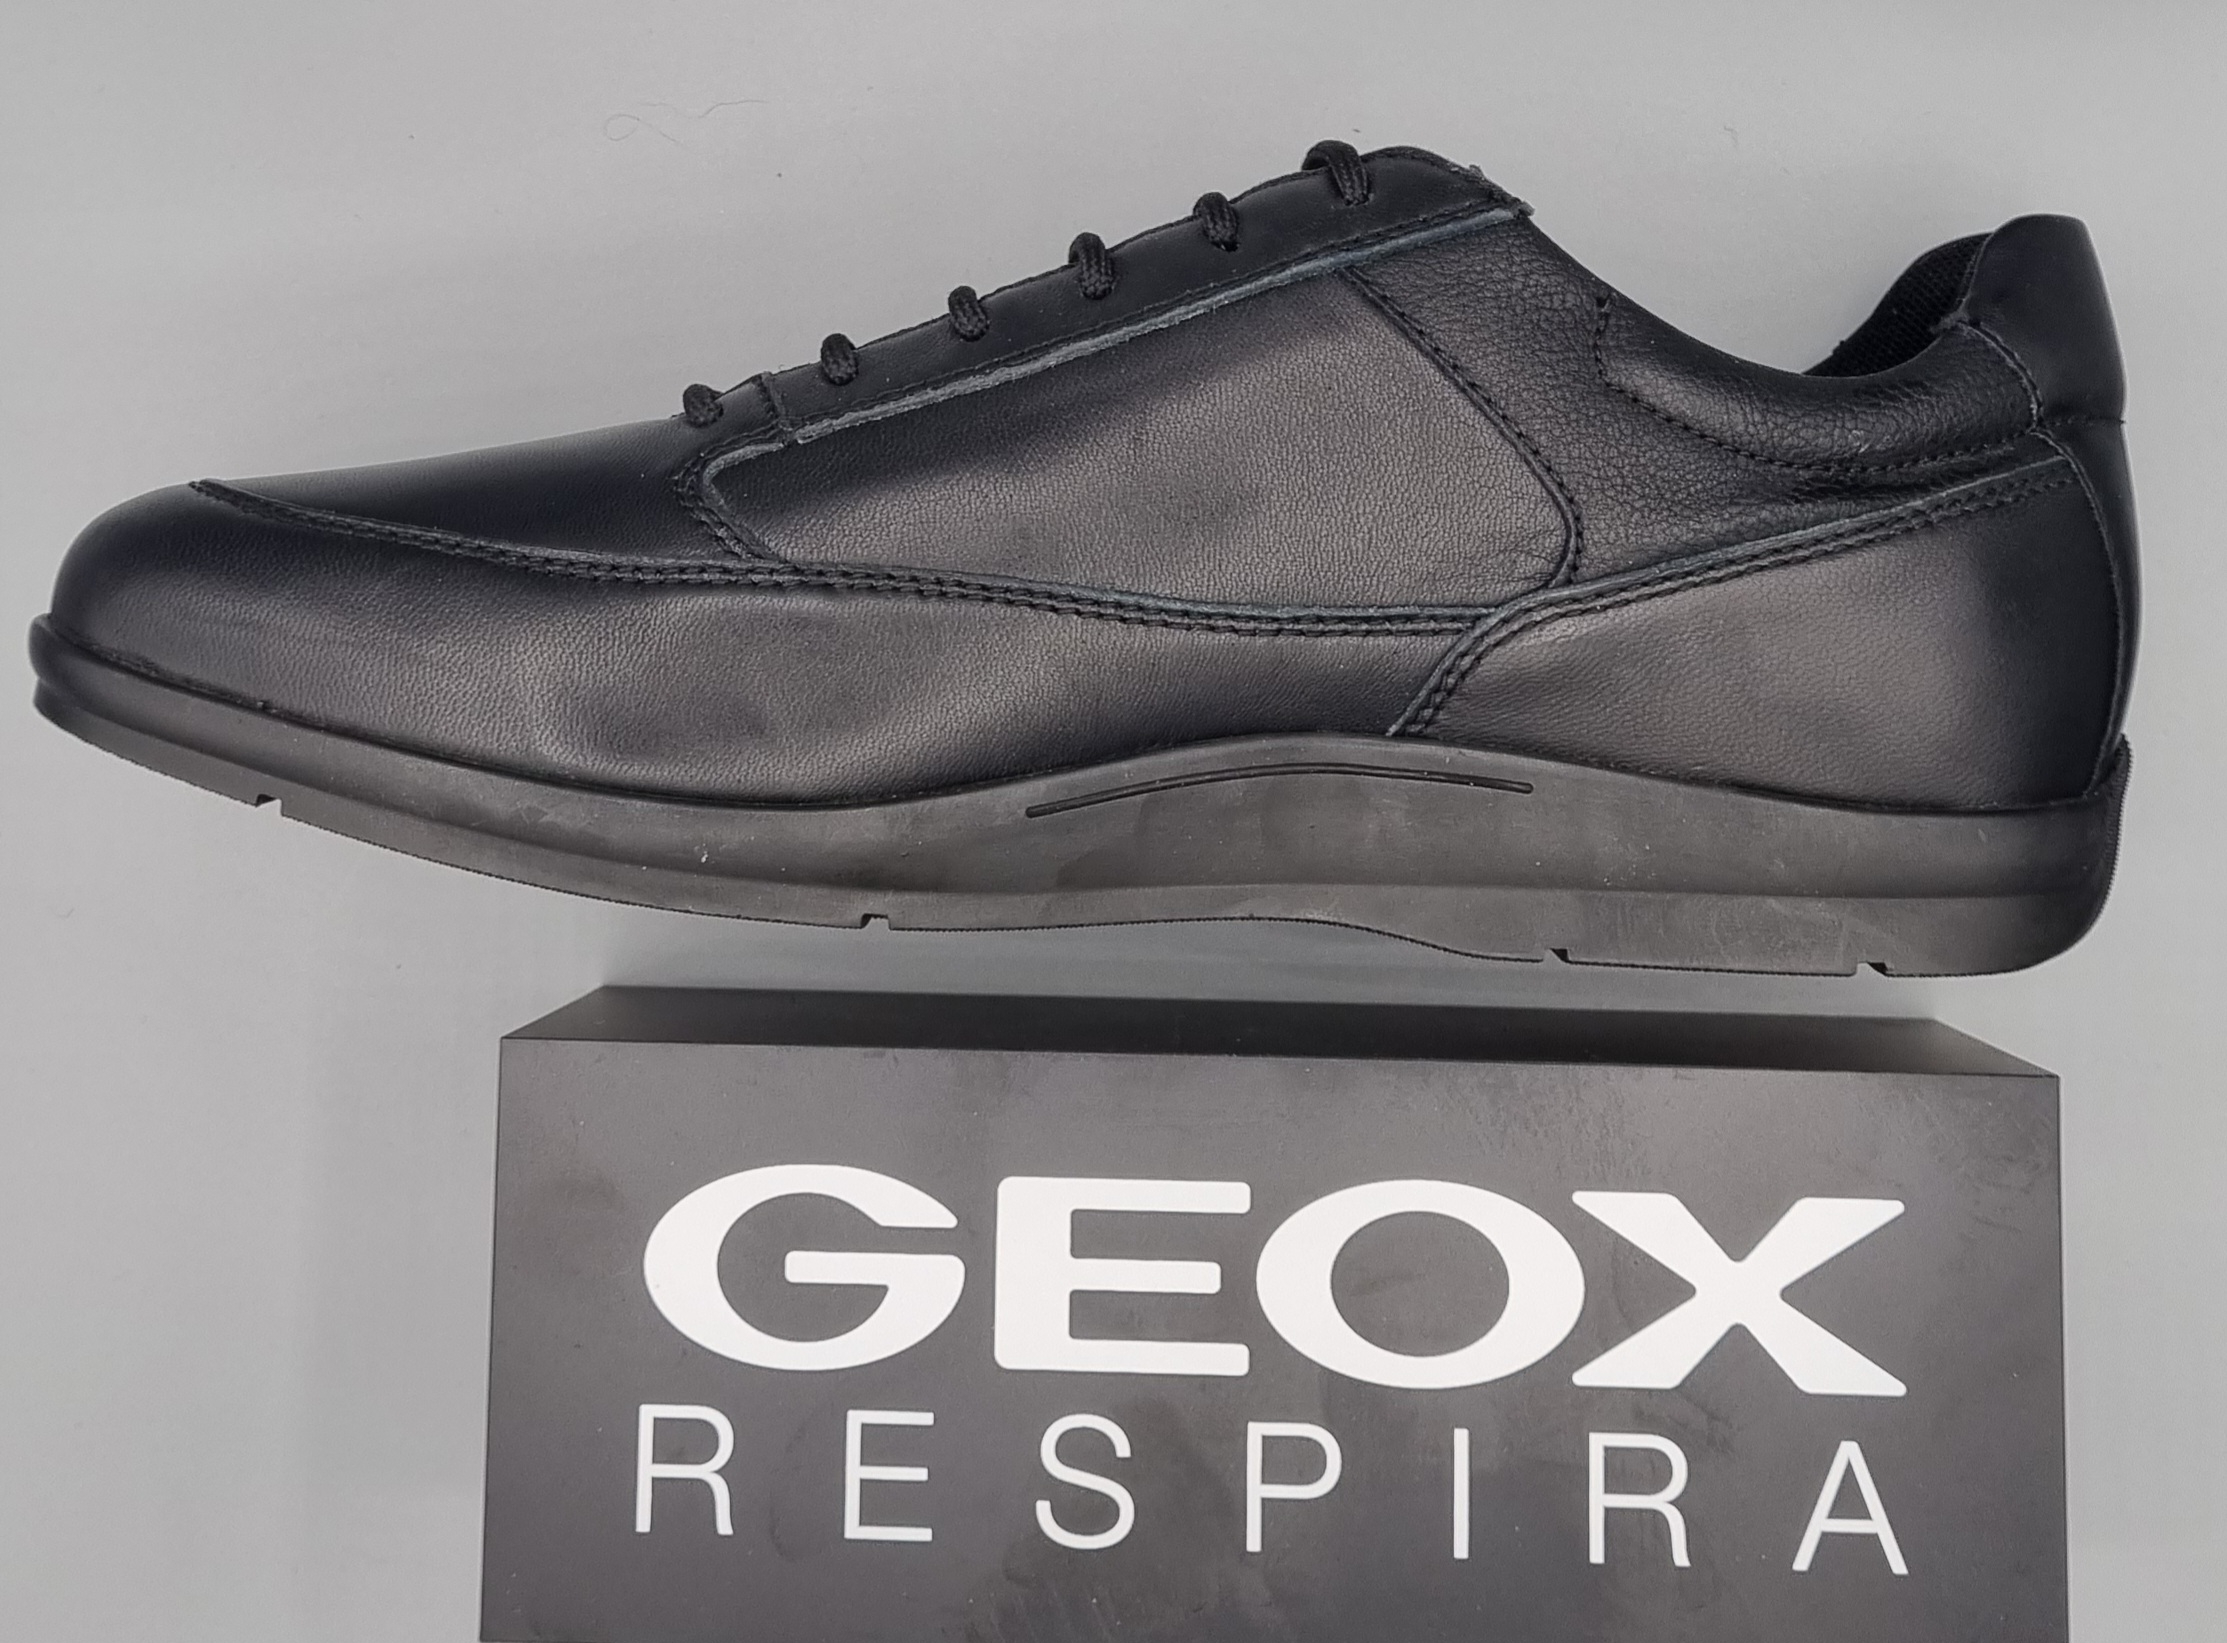 Sneakers Baskets GEOX modèle U Adrien - cuir noir- Nous Seuls Chaussures